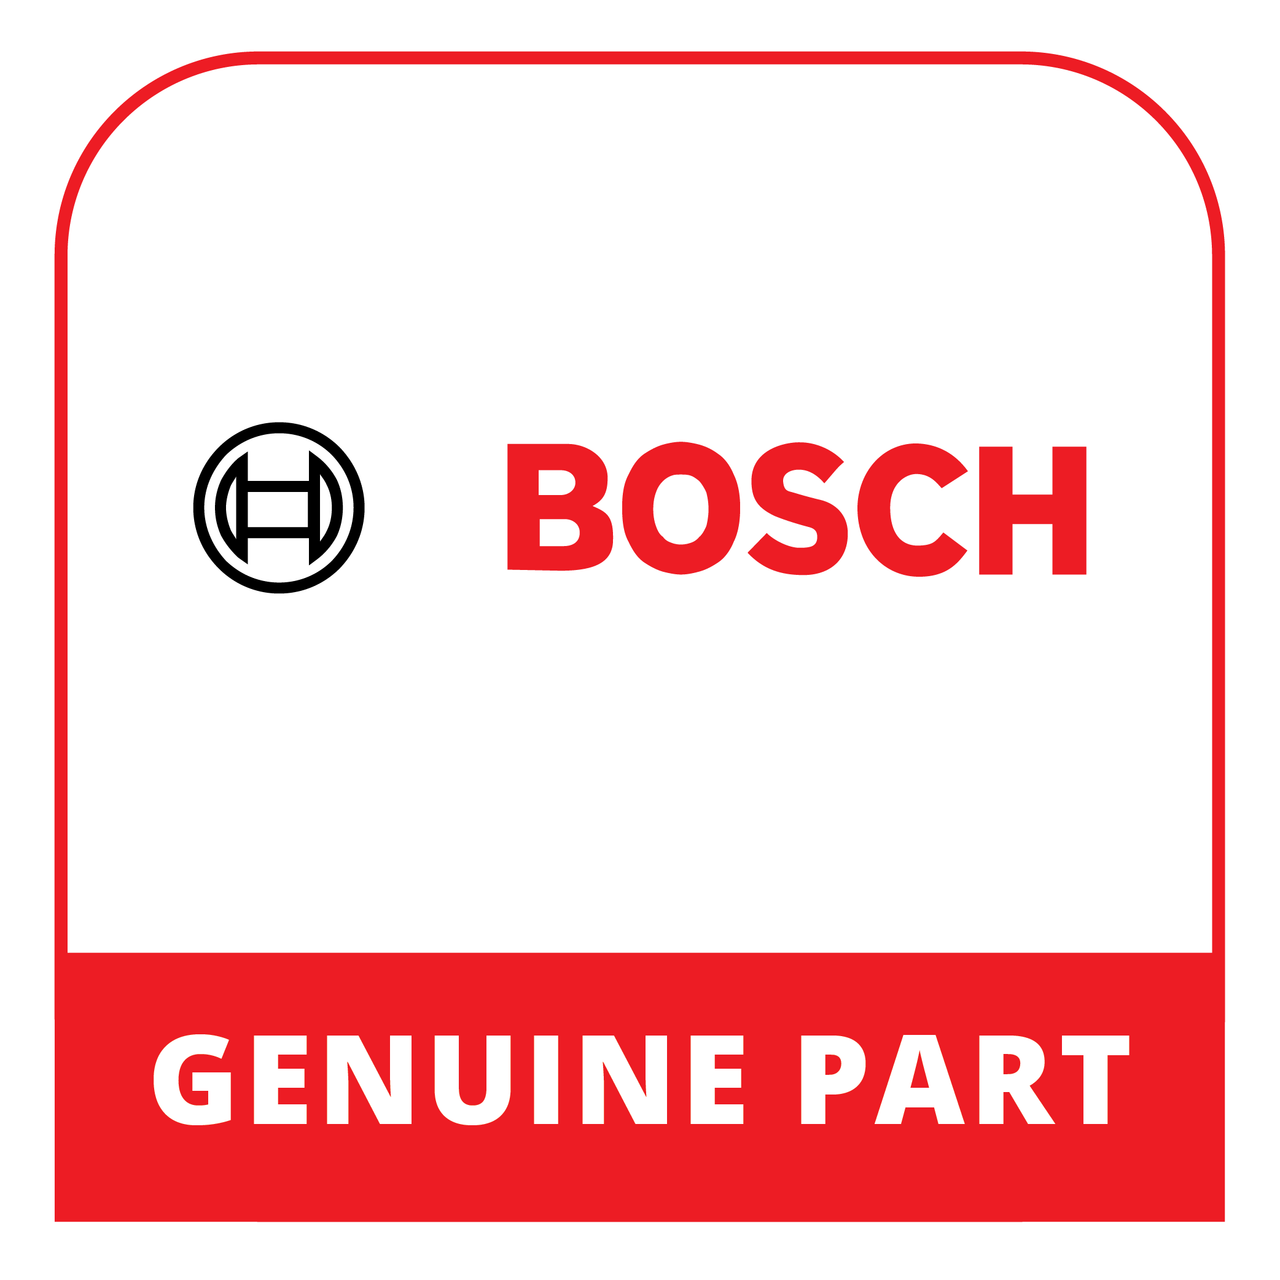 Bosch (Thermador) 20000728 - Shelf - Genuine Bosch (Thermador) Part